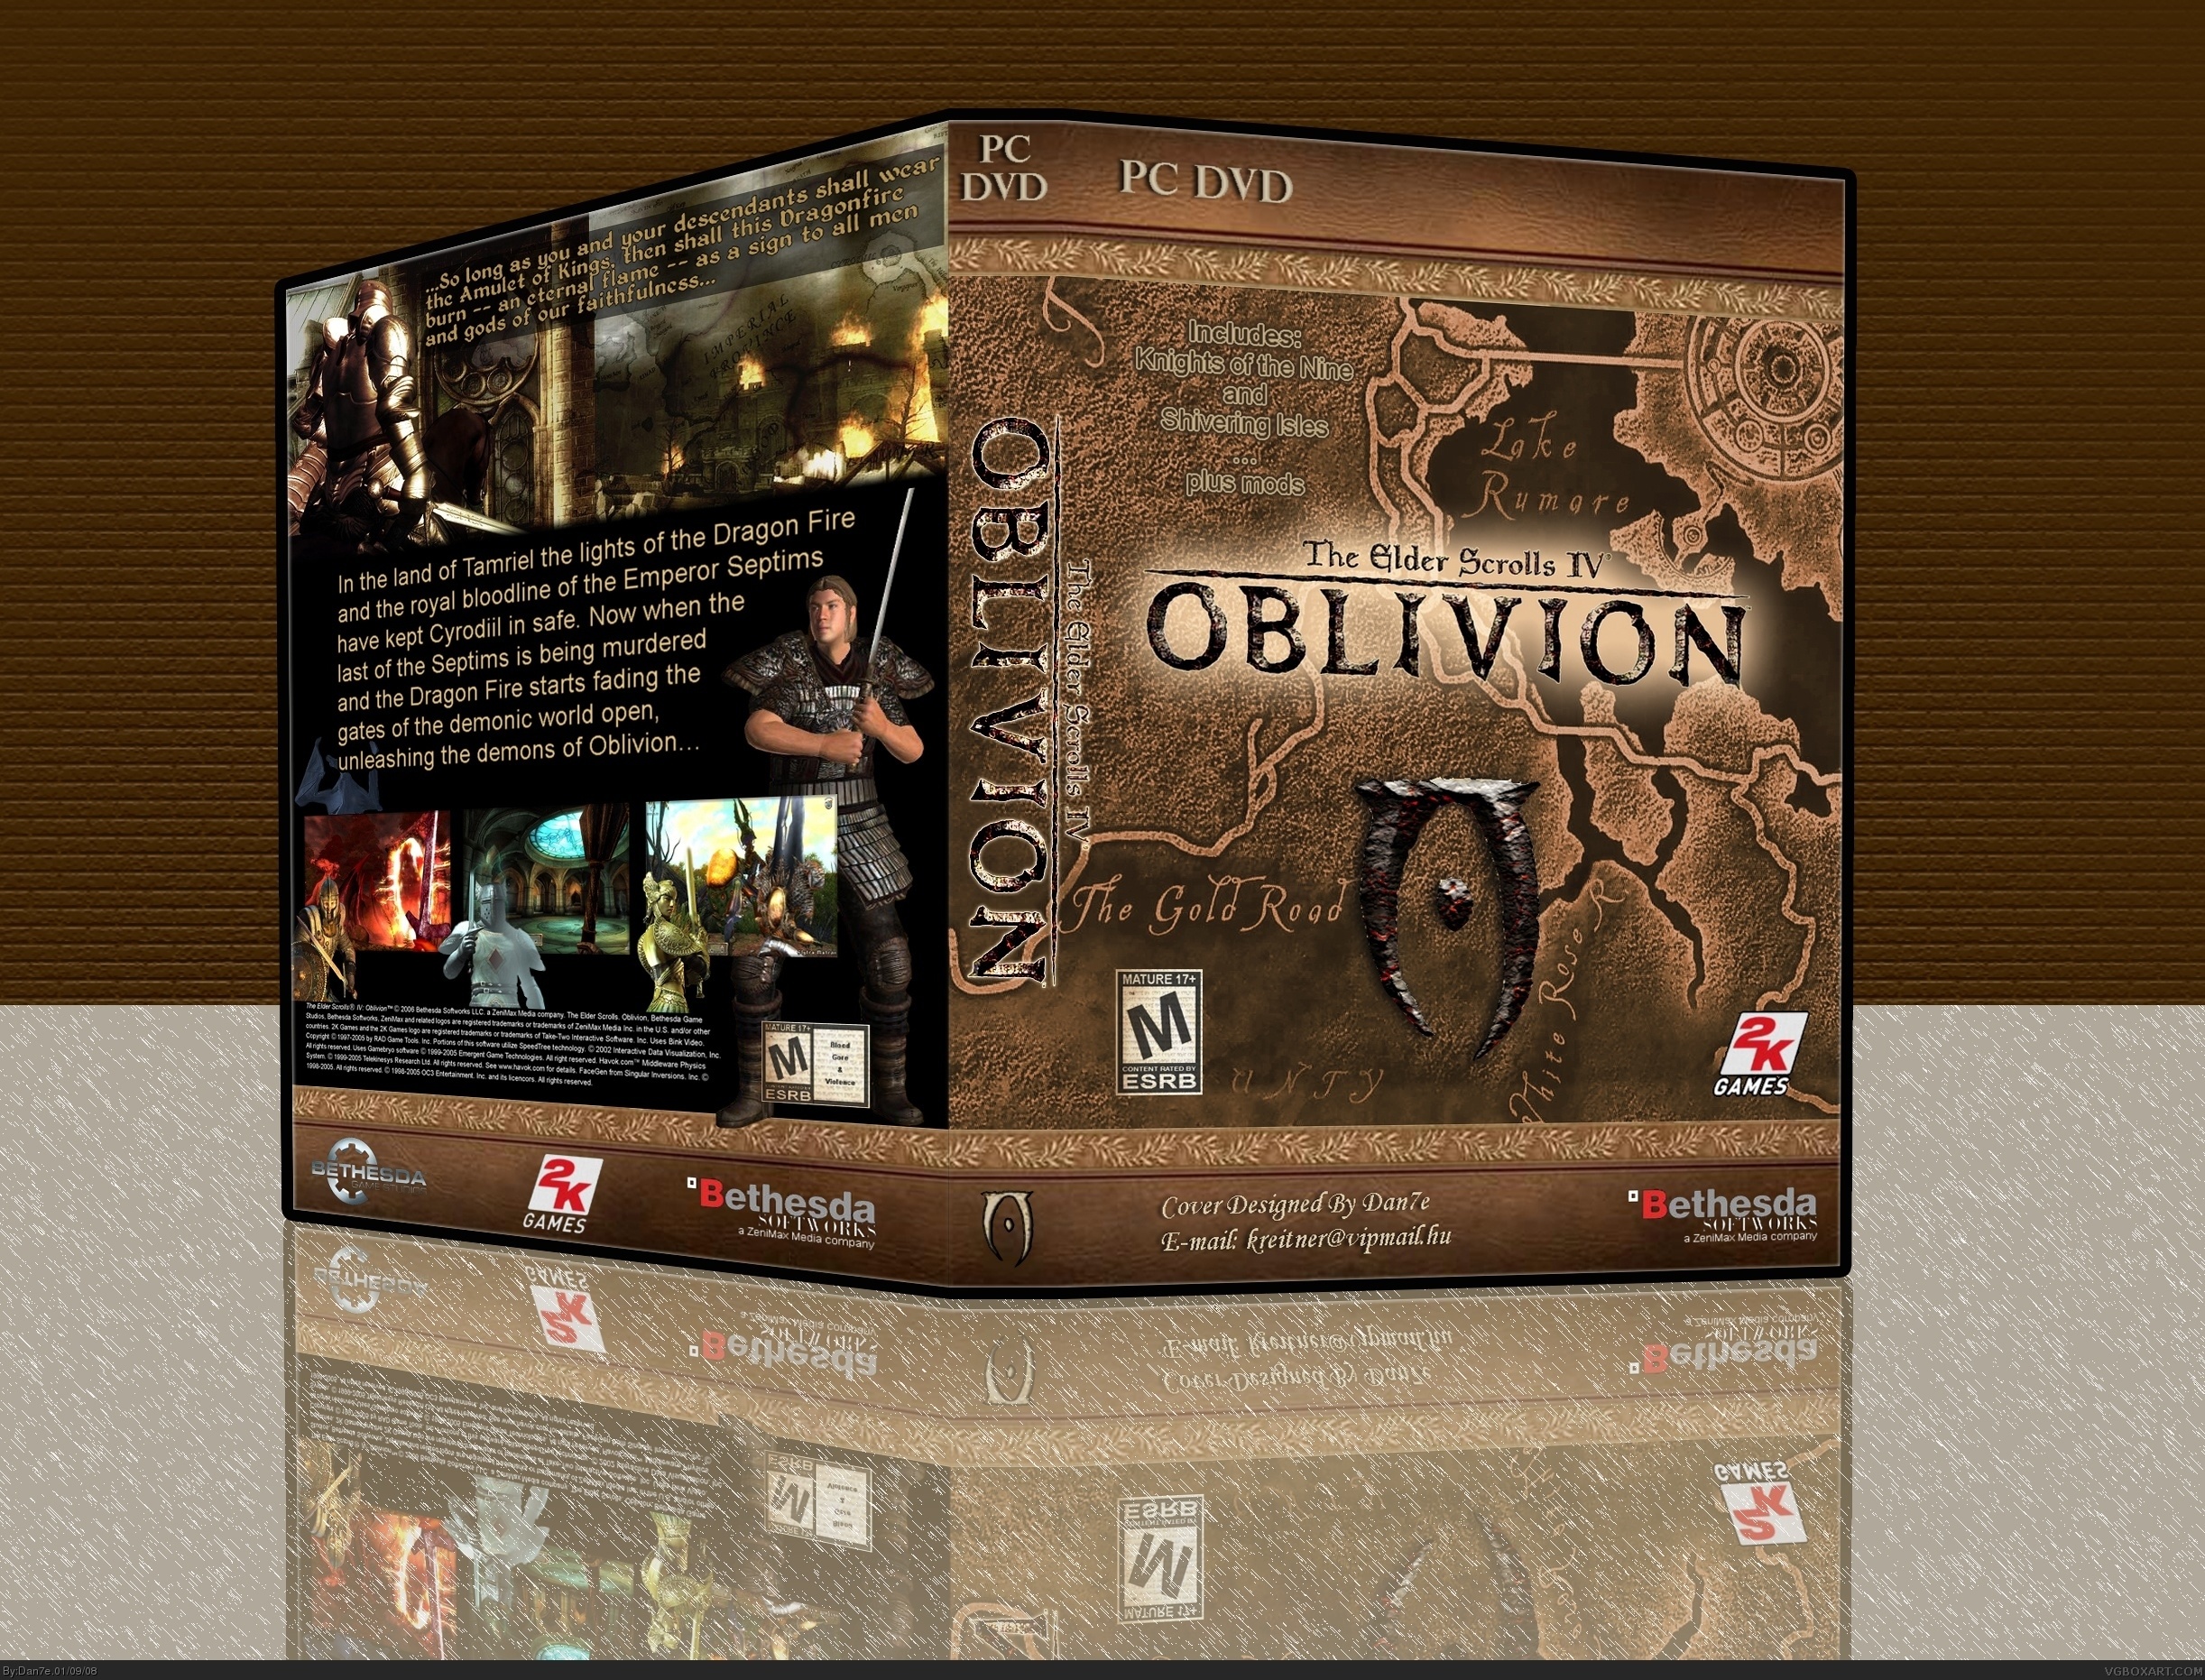 The Elder Scrolls IV - Oblivion box cover